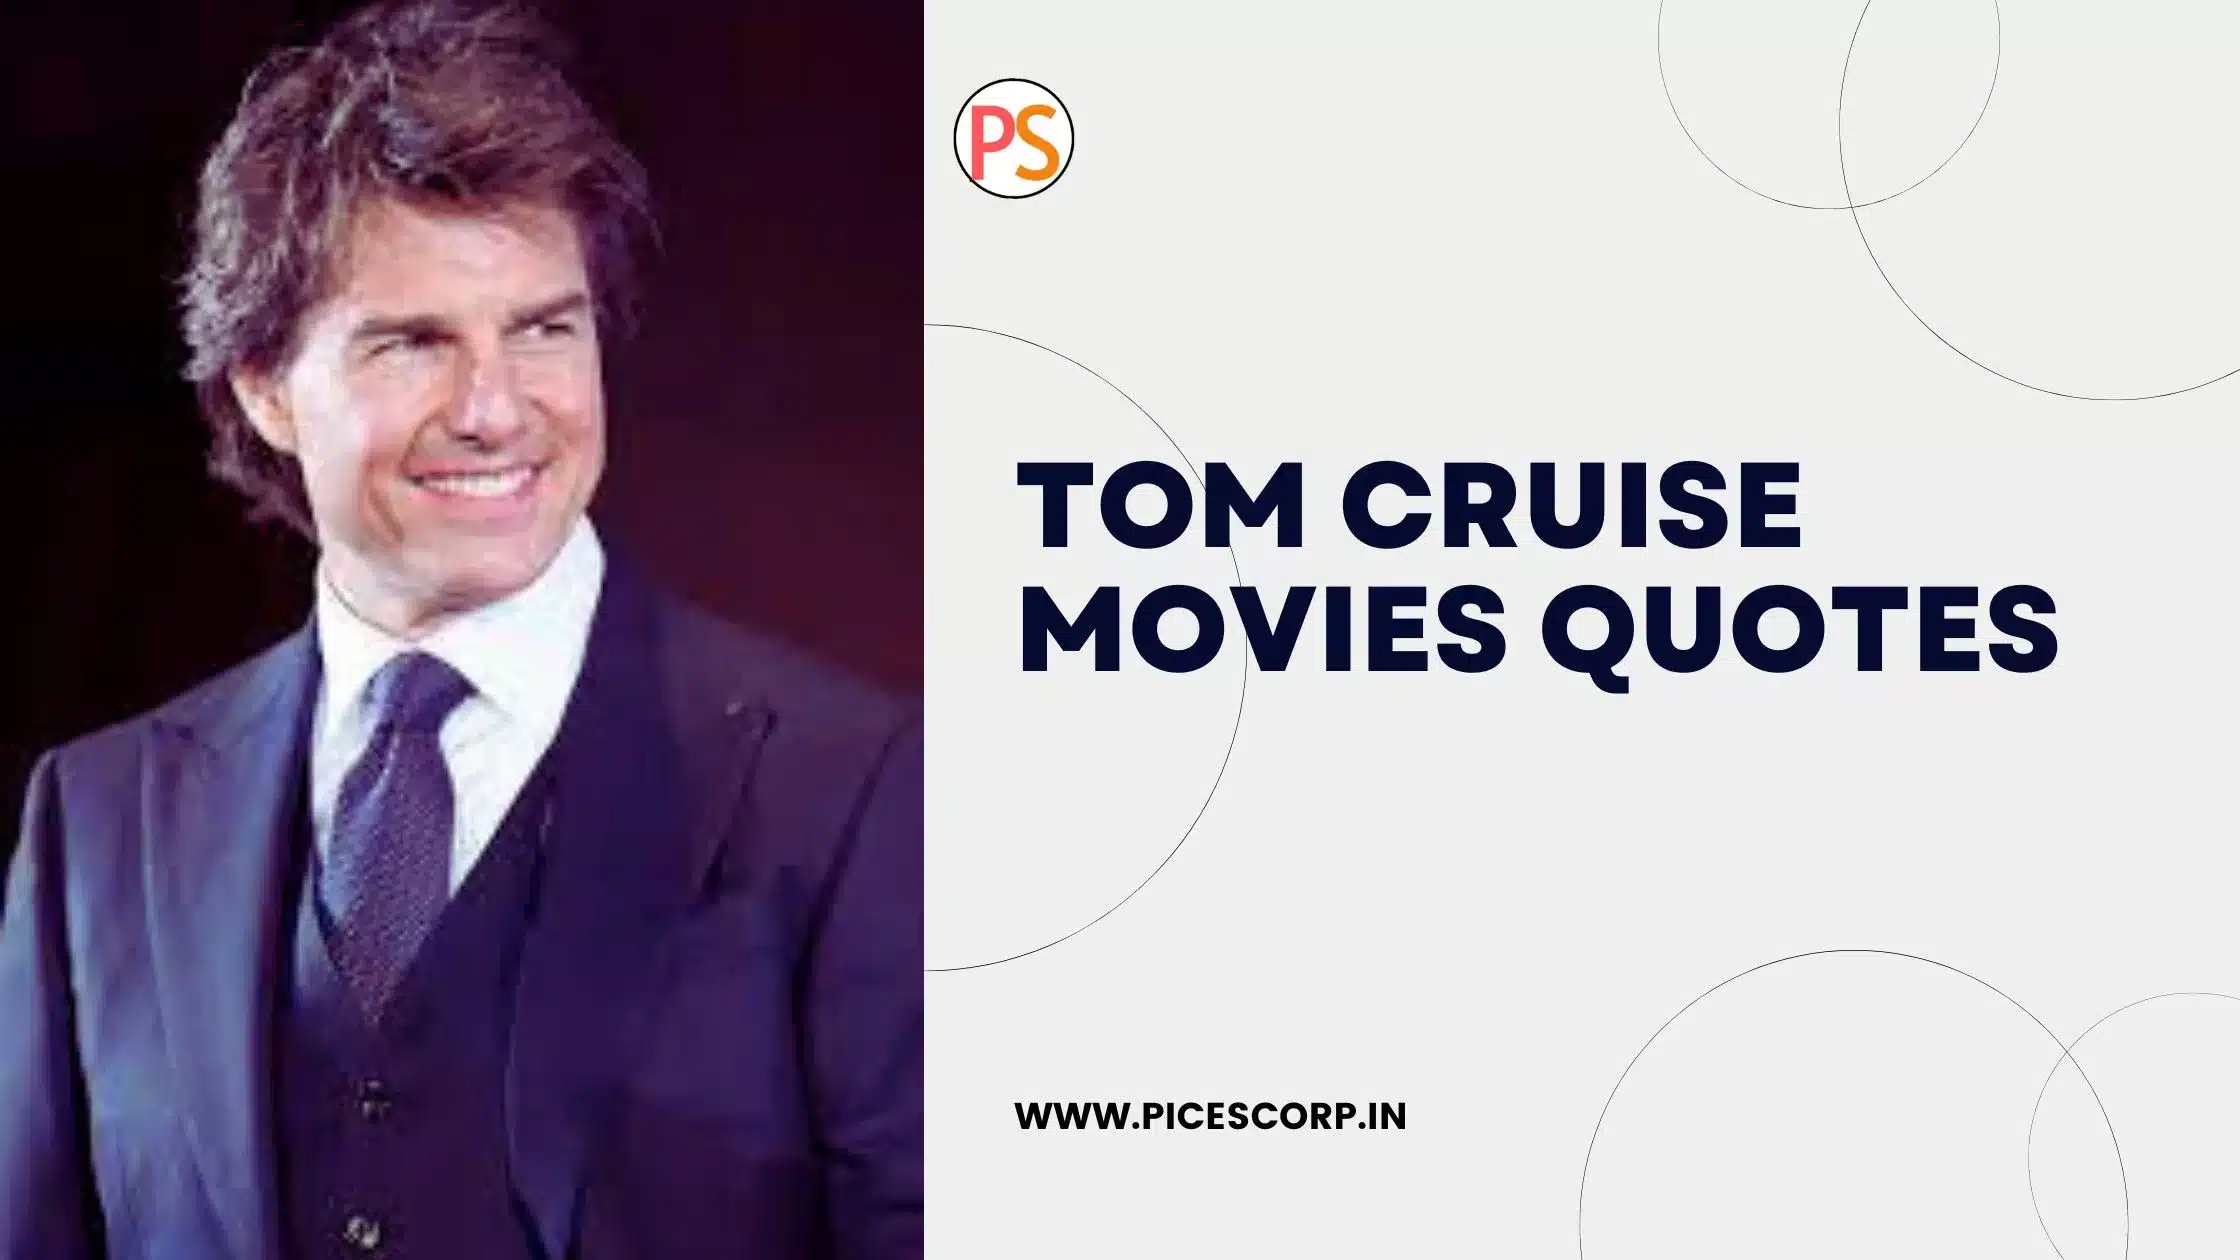 Tom Cruise movies quotes